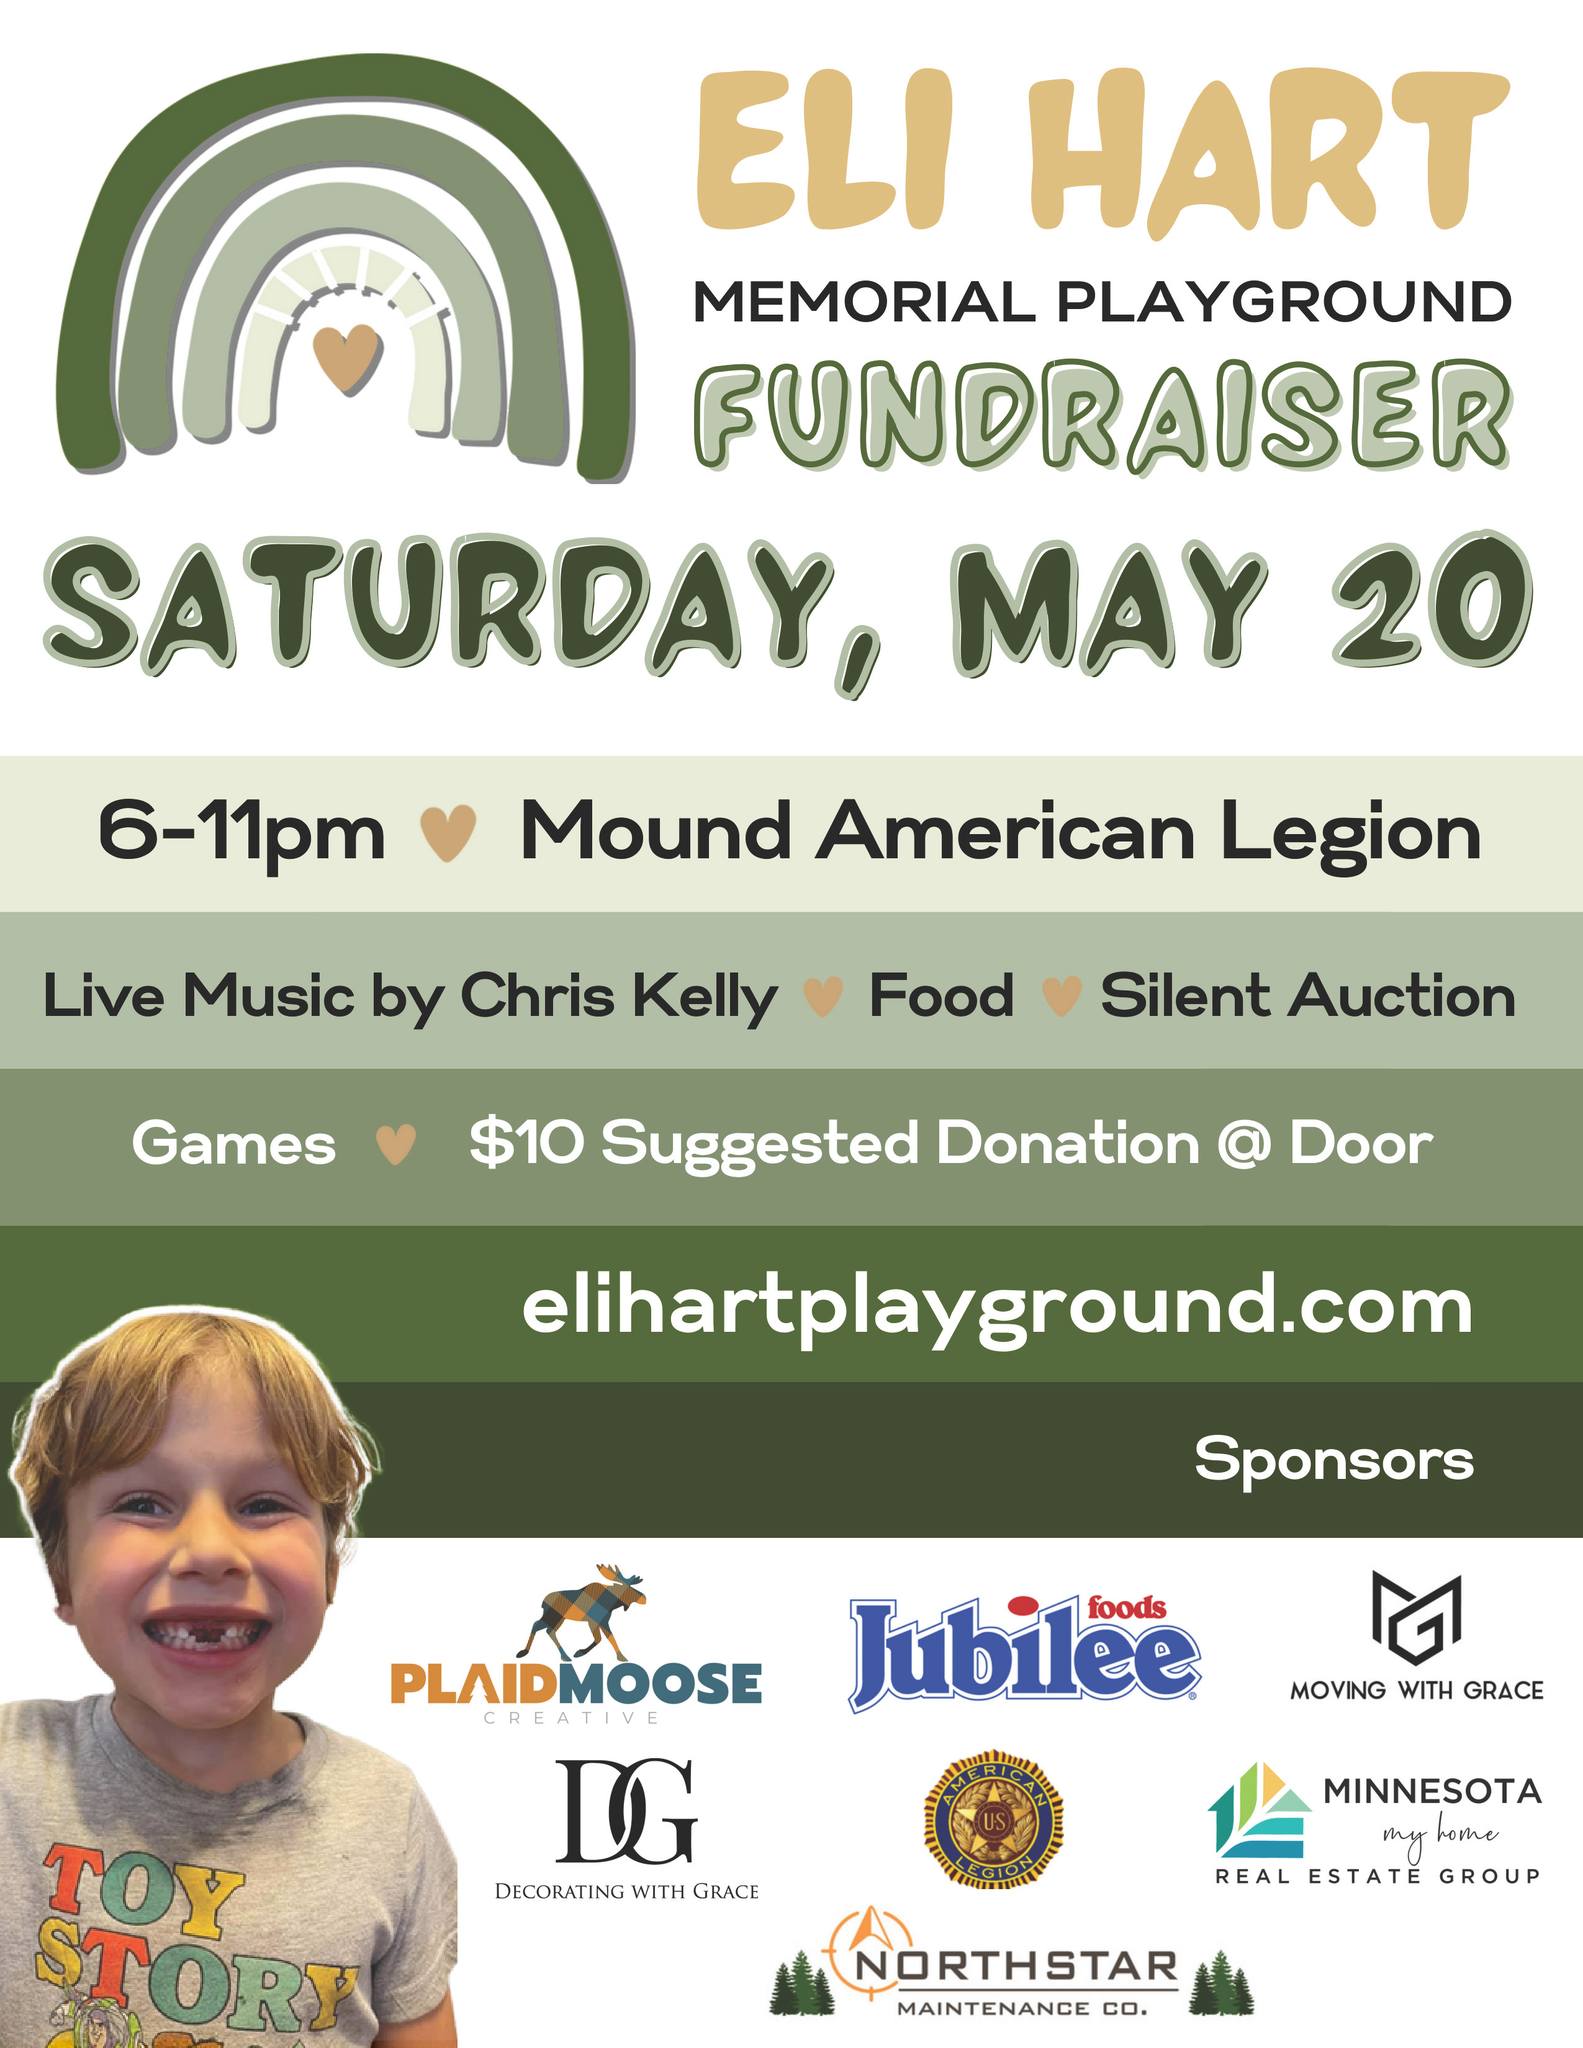 Eli Hart Memorial Playground